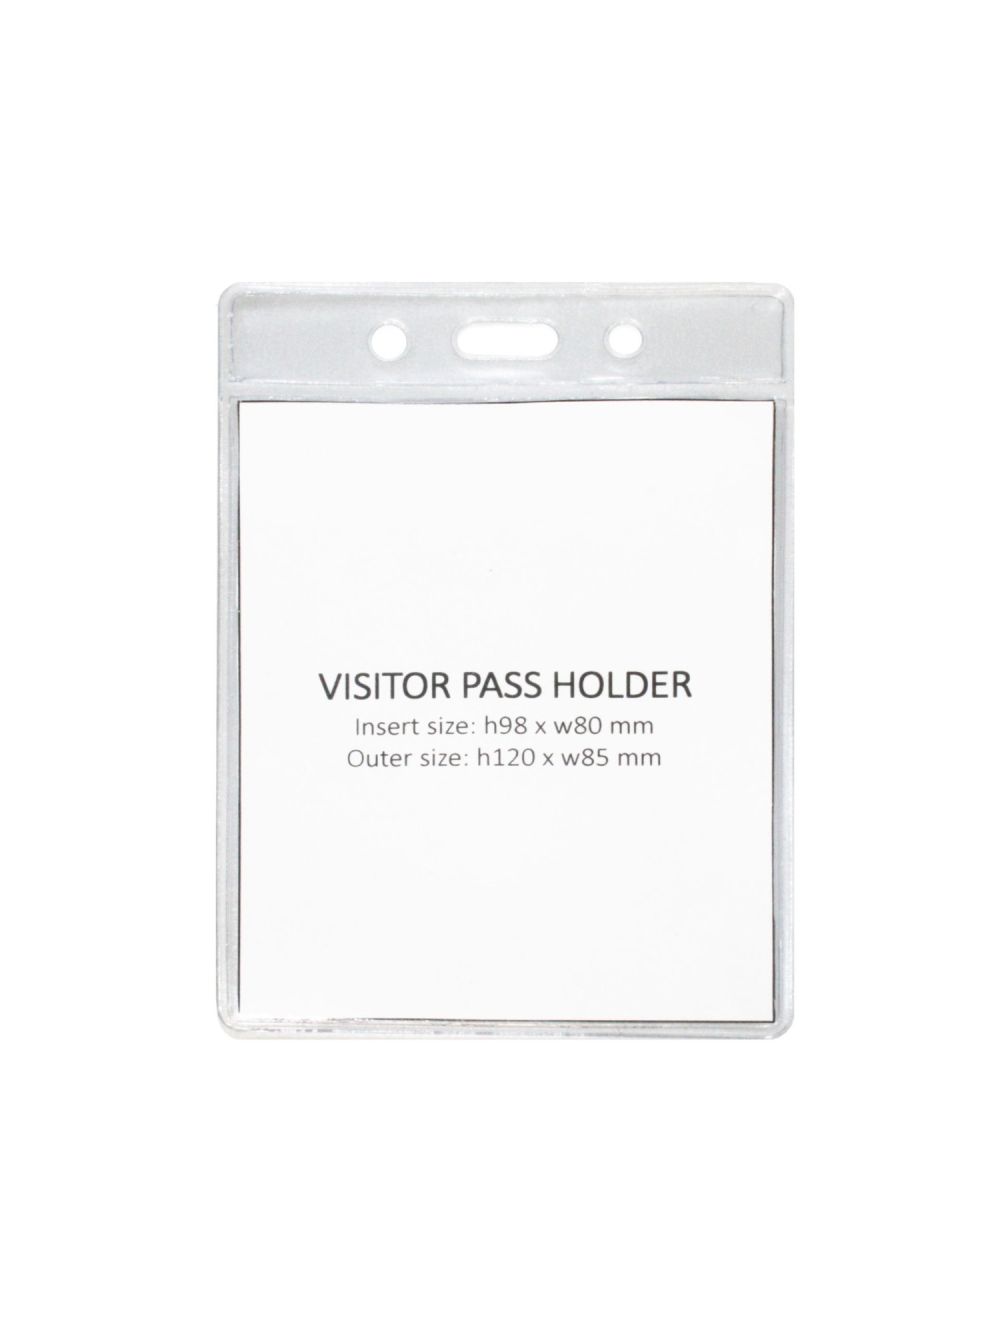 Vinyl Badge Holder with Resealable Zip Closure - 60 x 99 mm Insert